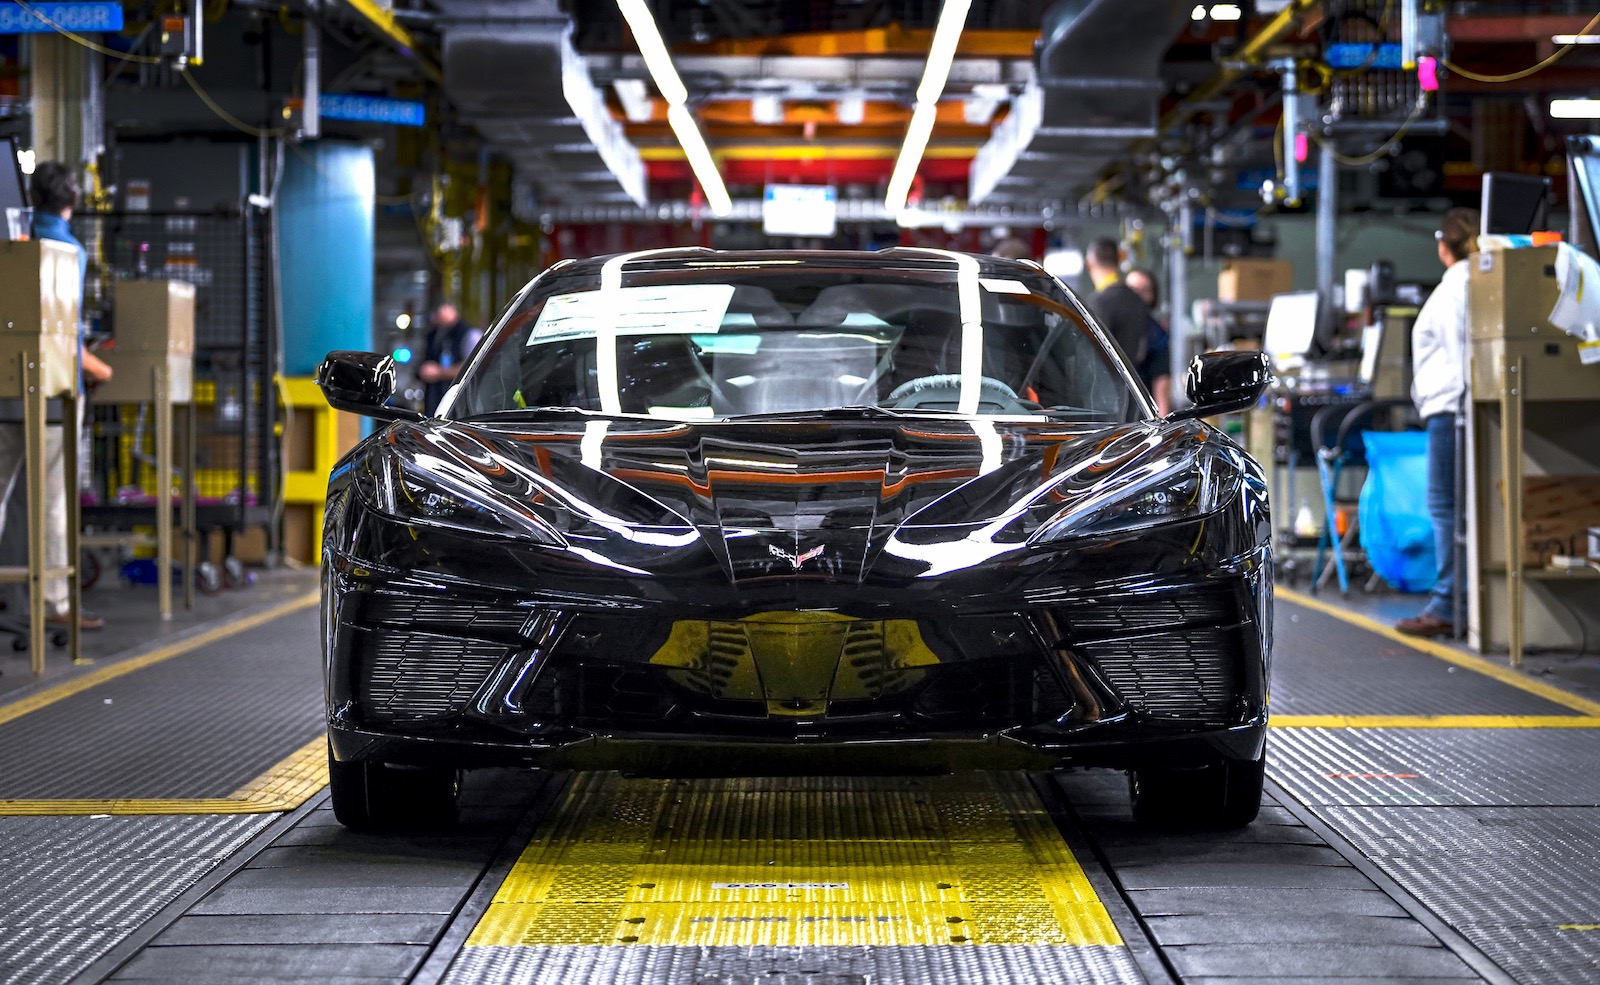 2020 Chevrolet C8 Corvette production officially begins